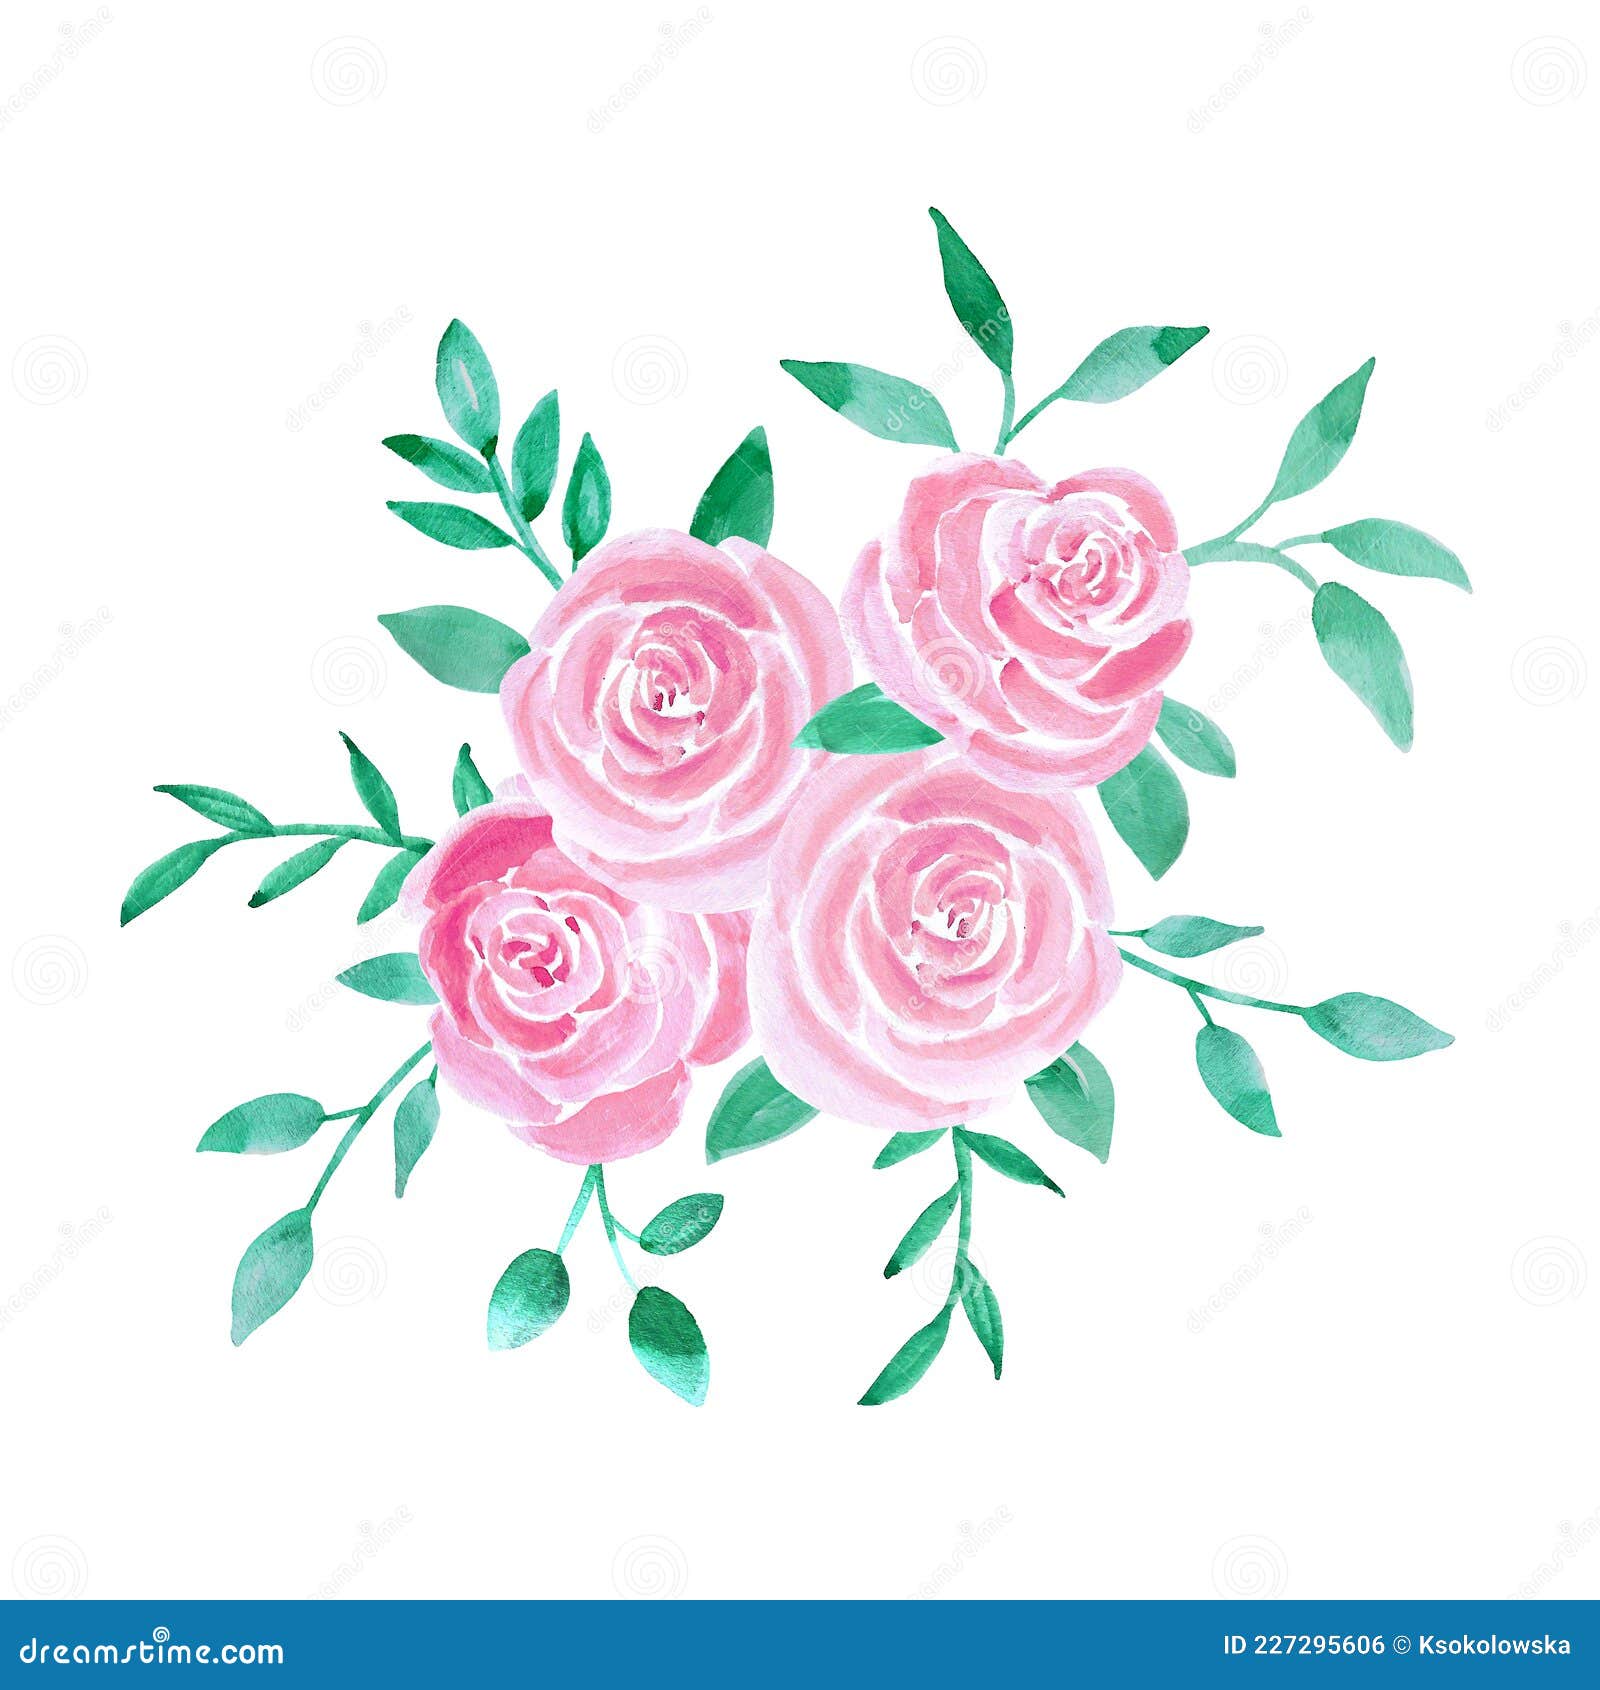 Watercolor Rose Flowers Bouquet Illustration Stock Illustration ...